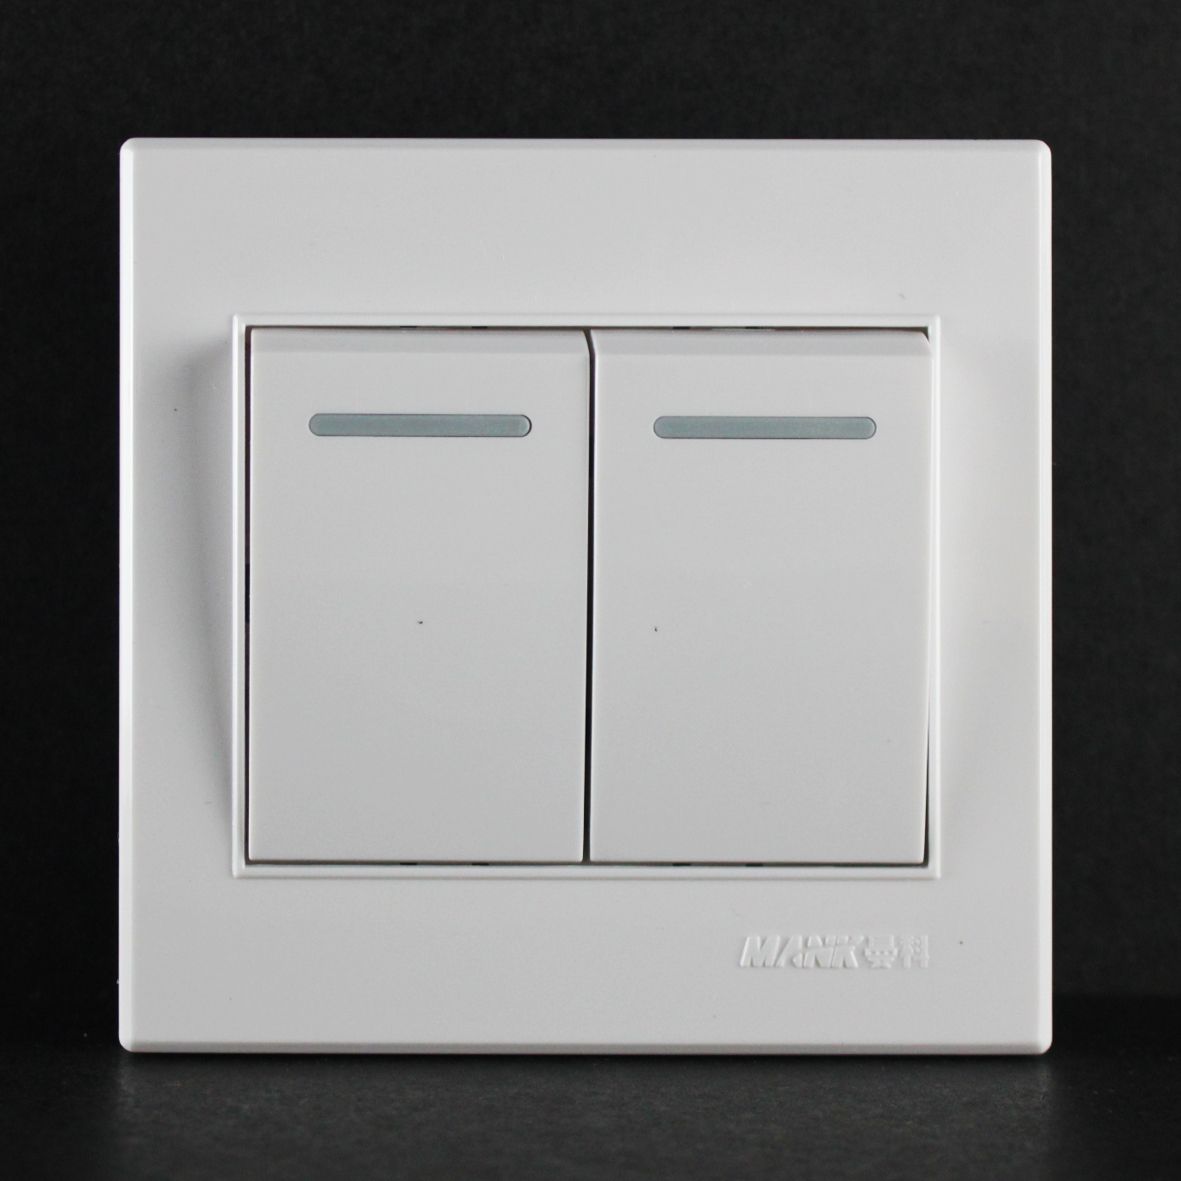 J1000-Two big board switch